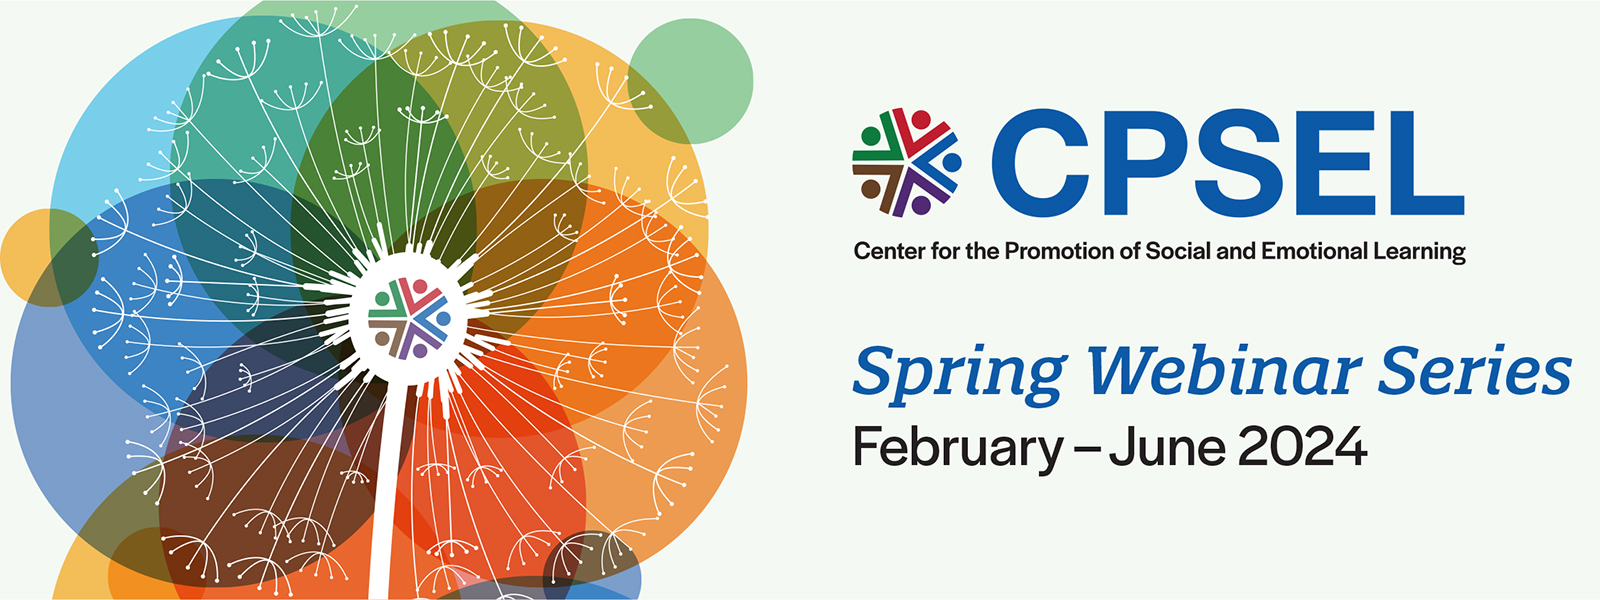 CPSEL Spring Webinar Series is February through June 2024